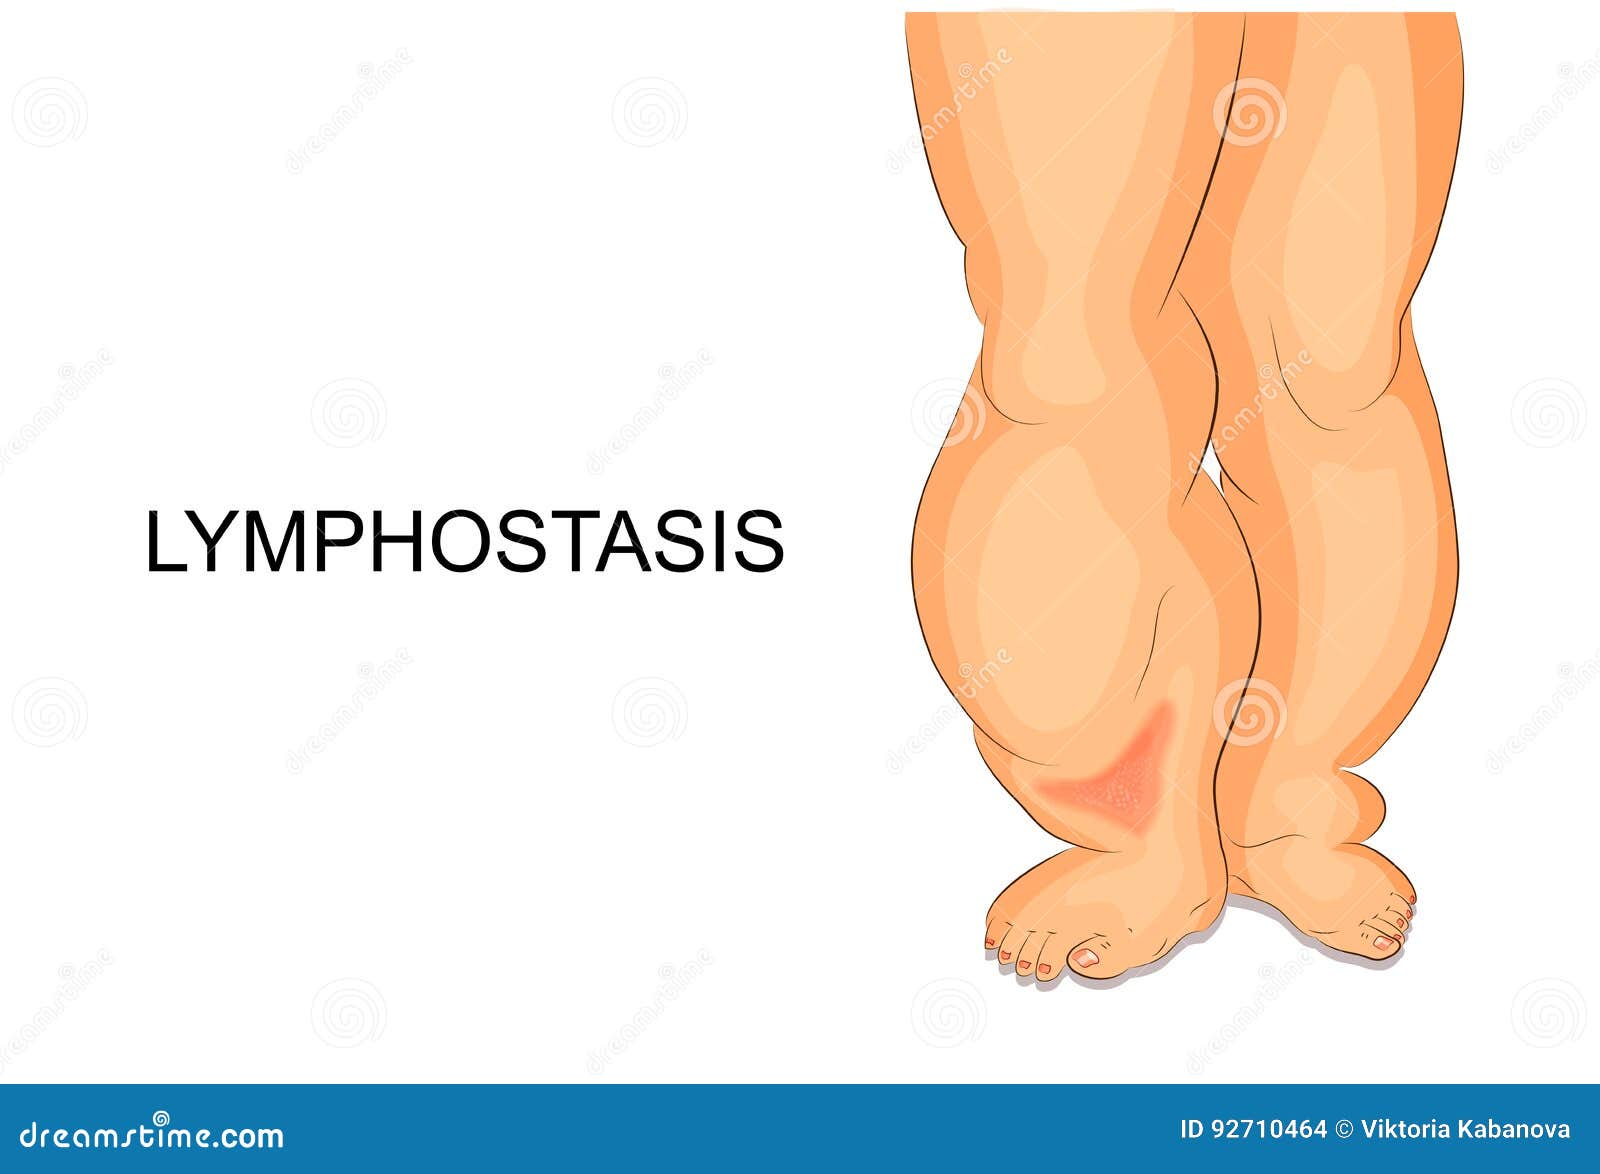 lymphostasis. lymph edema of the feet